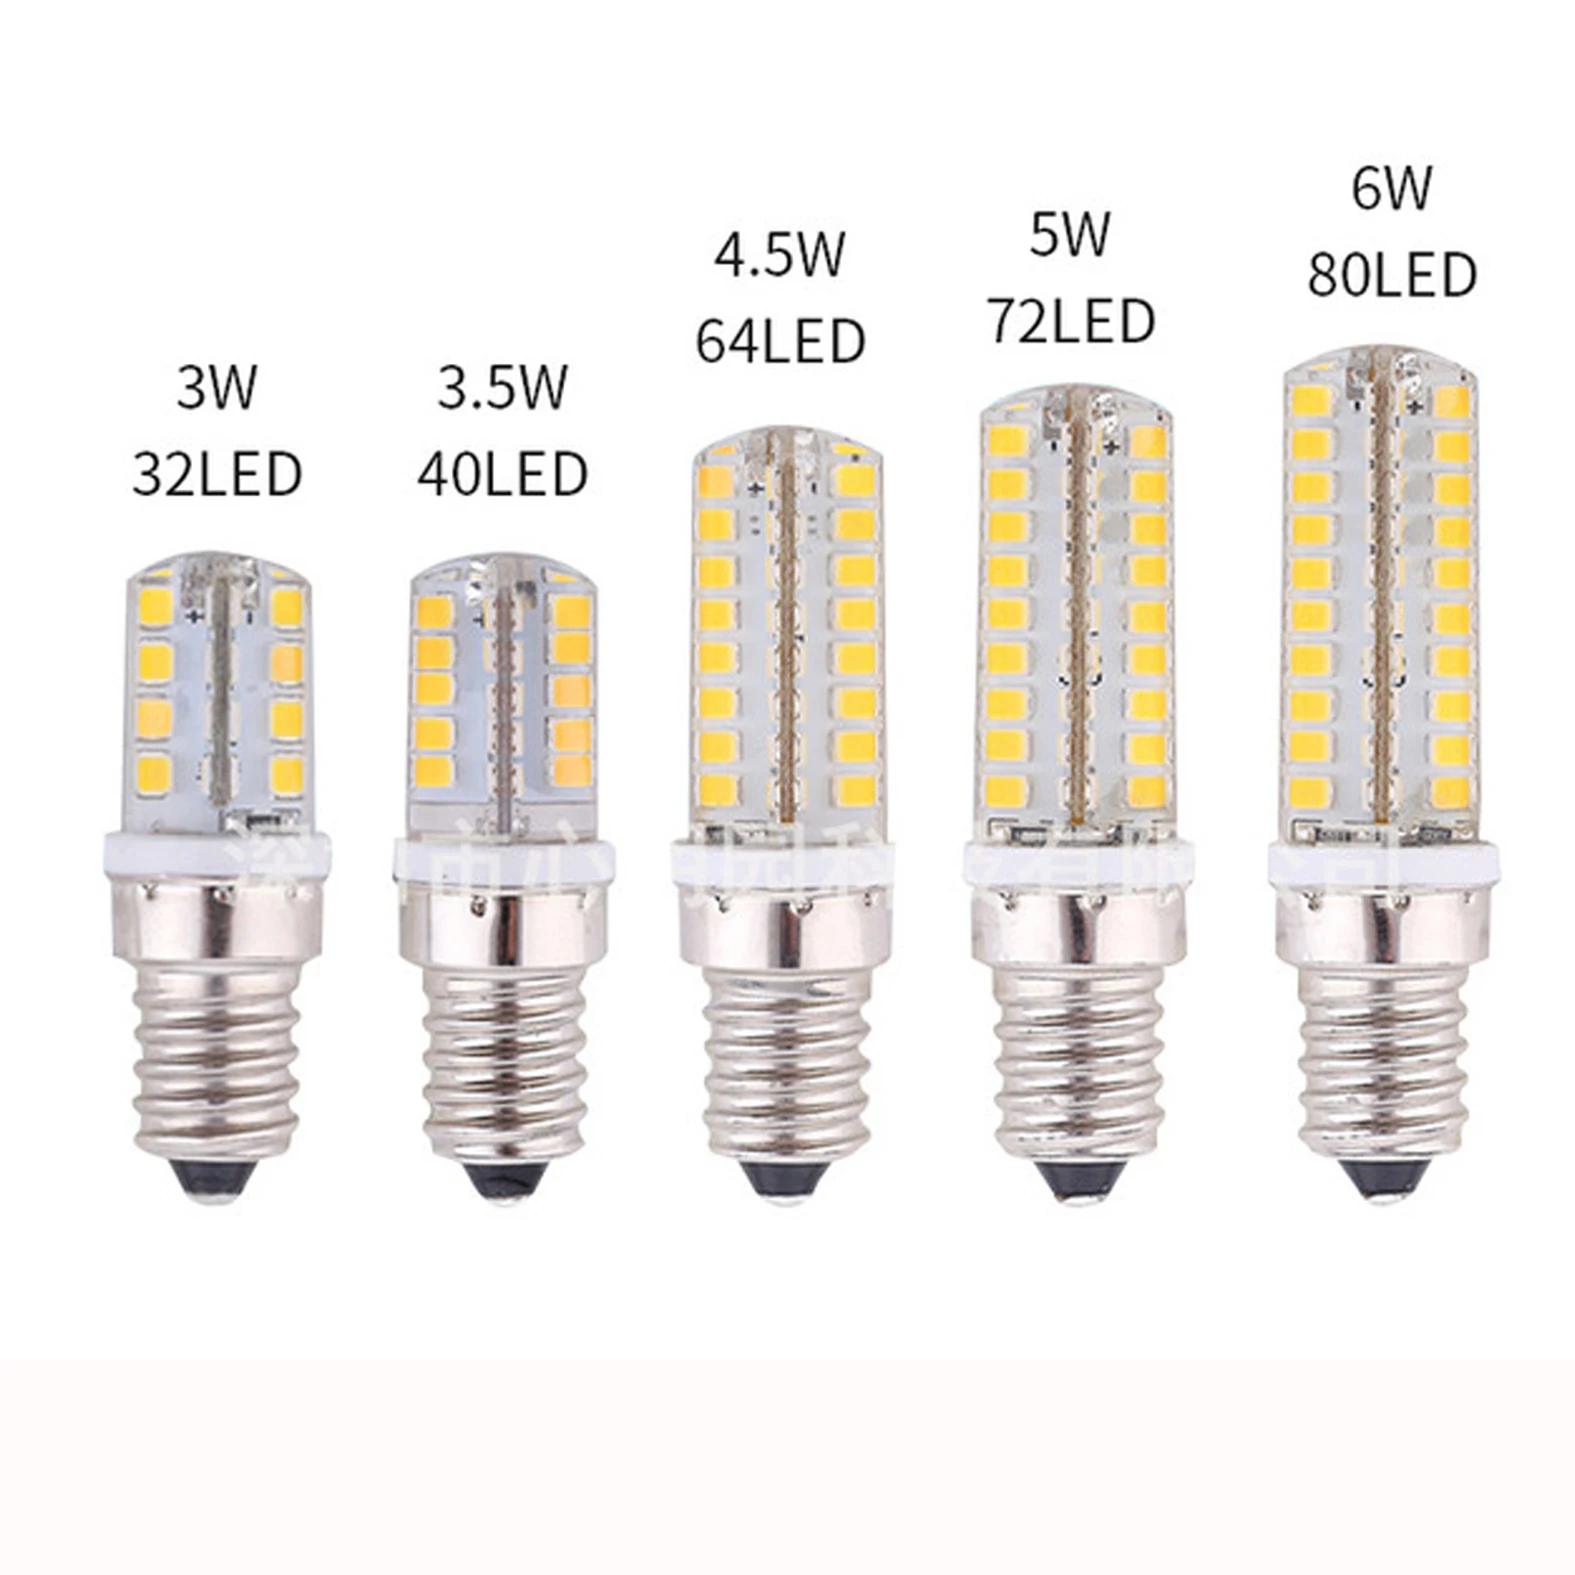 

LED Lamp E14 Corn Bulb AC 220V 3W 5W 6W SMD 2835 LED Light 360 Degrees Beam Angle Spotlight Lamps Bulb 5pcs